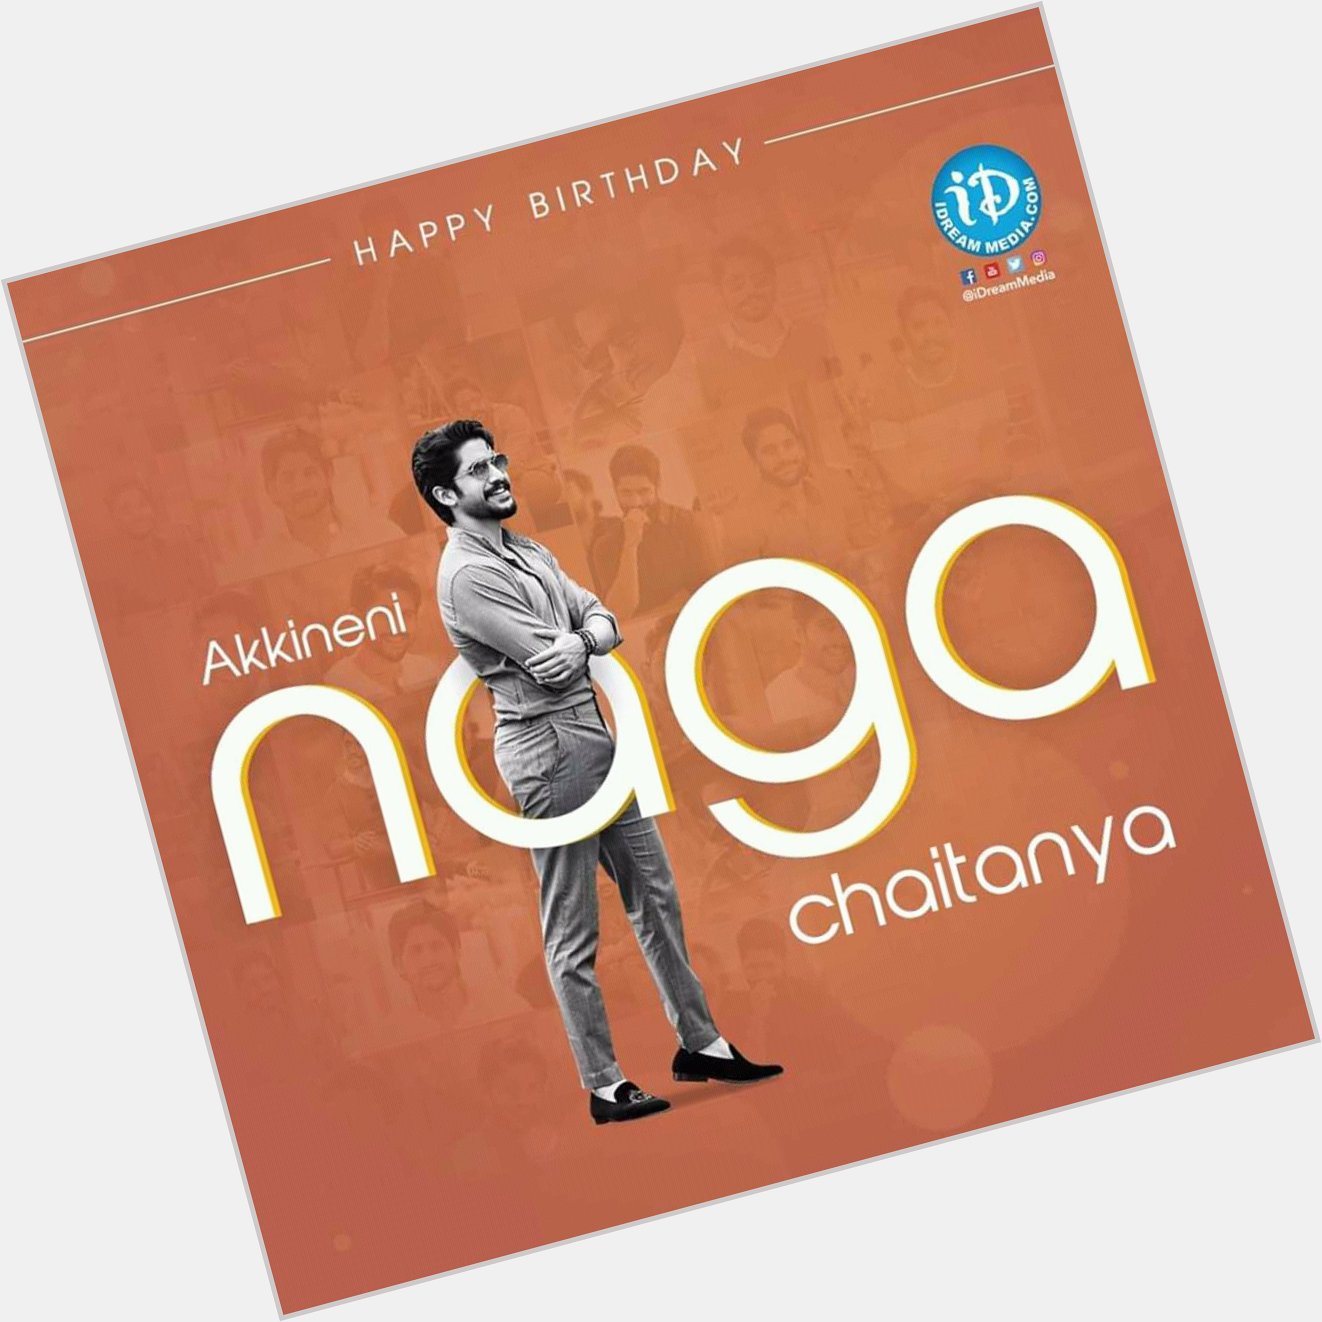 Finally the day has arrived   Happy birthday chaiii
Yuva smart akkineni naga chaitanya sir... 